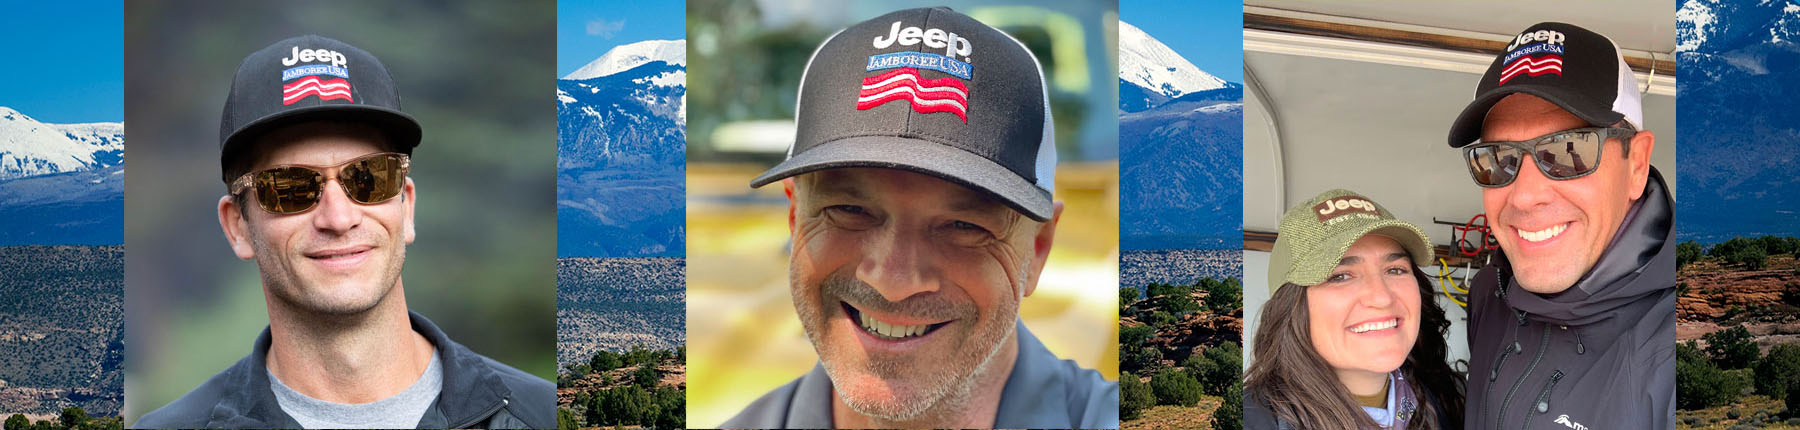 jeep hats header